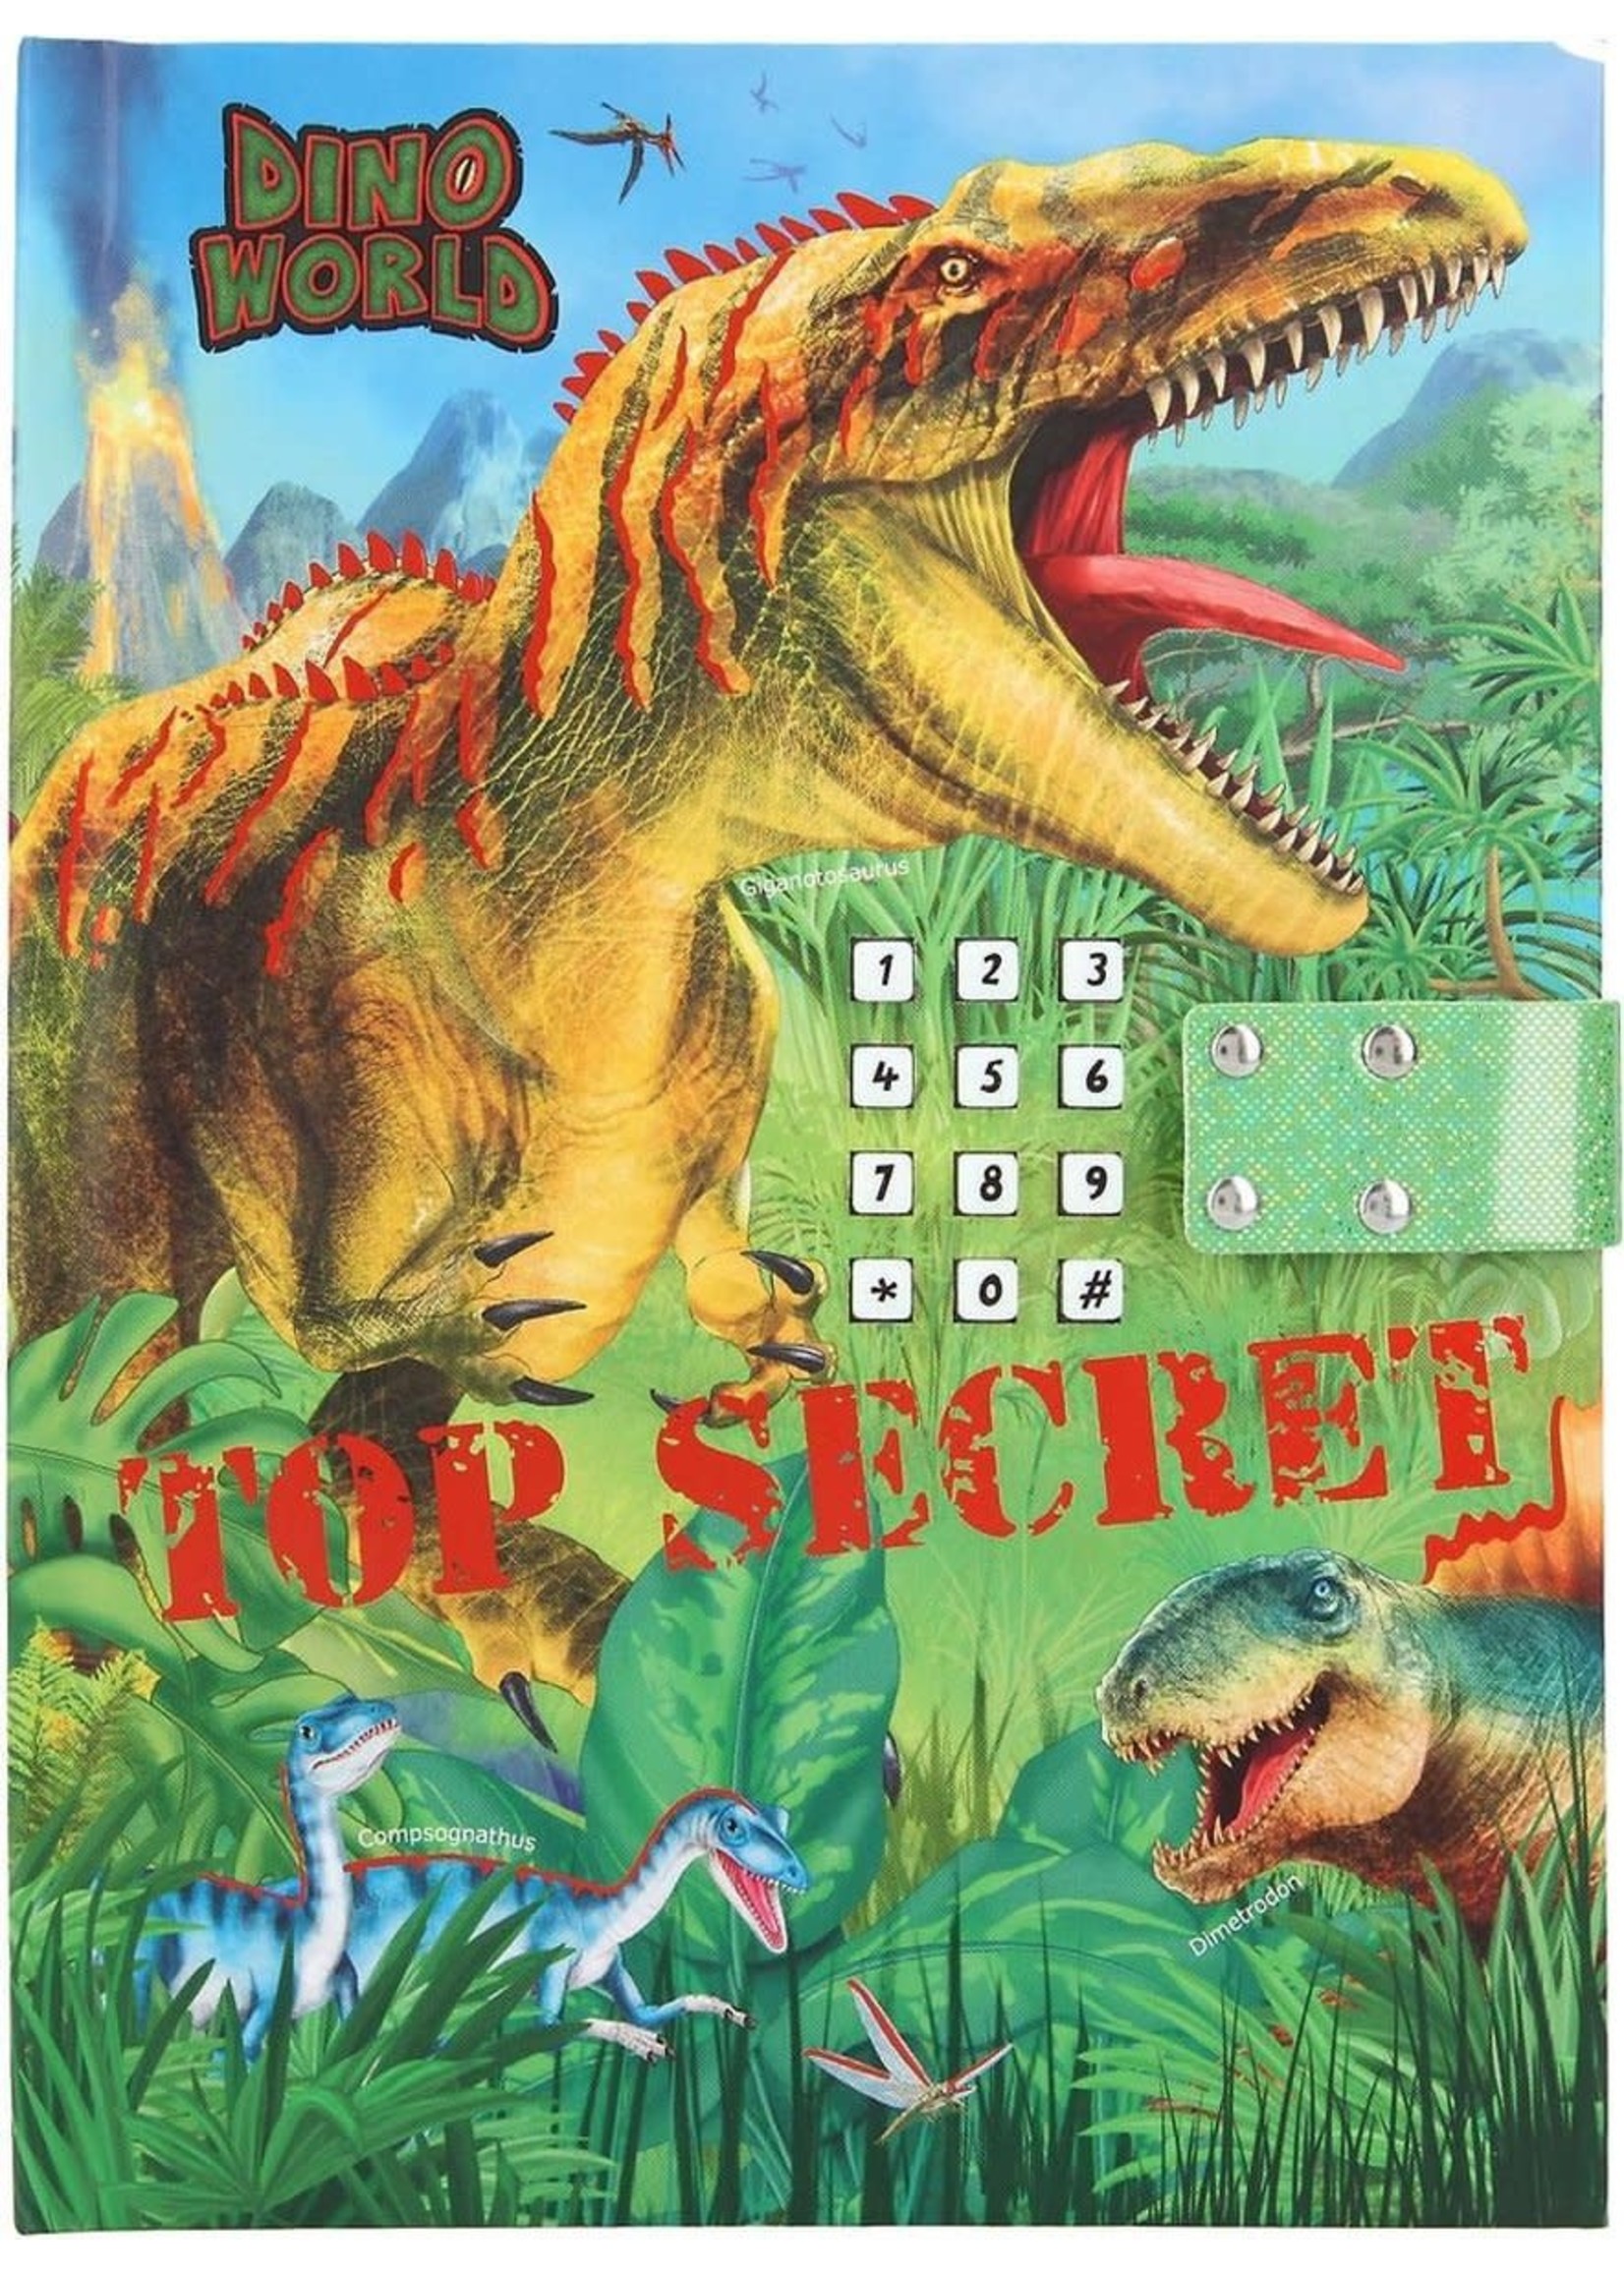 Depesche Dino World dagboek met geheime code